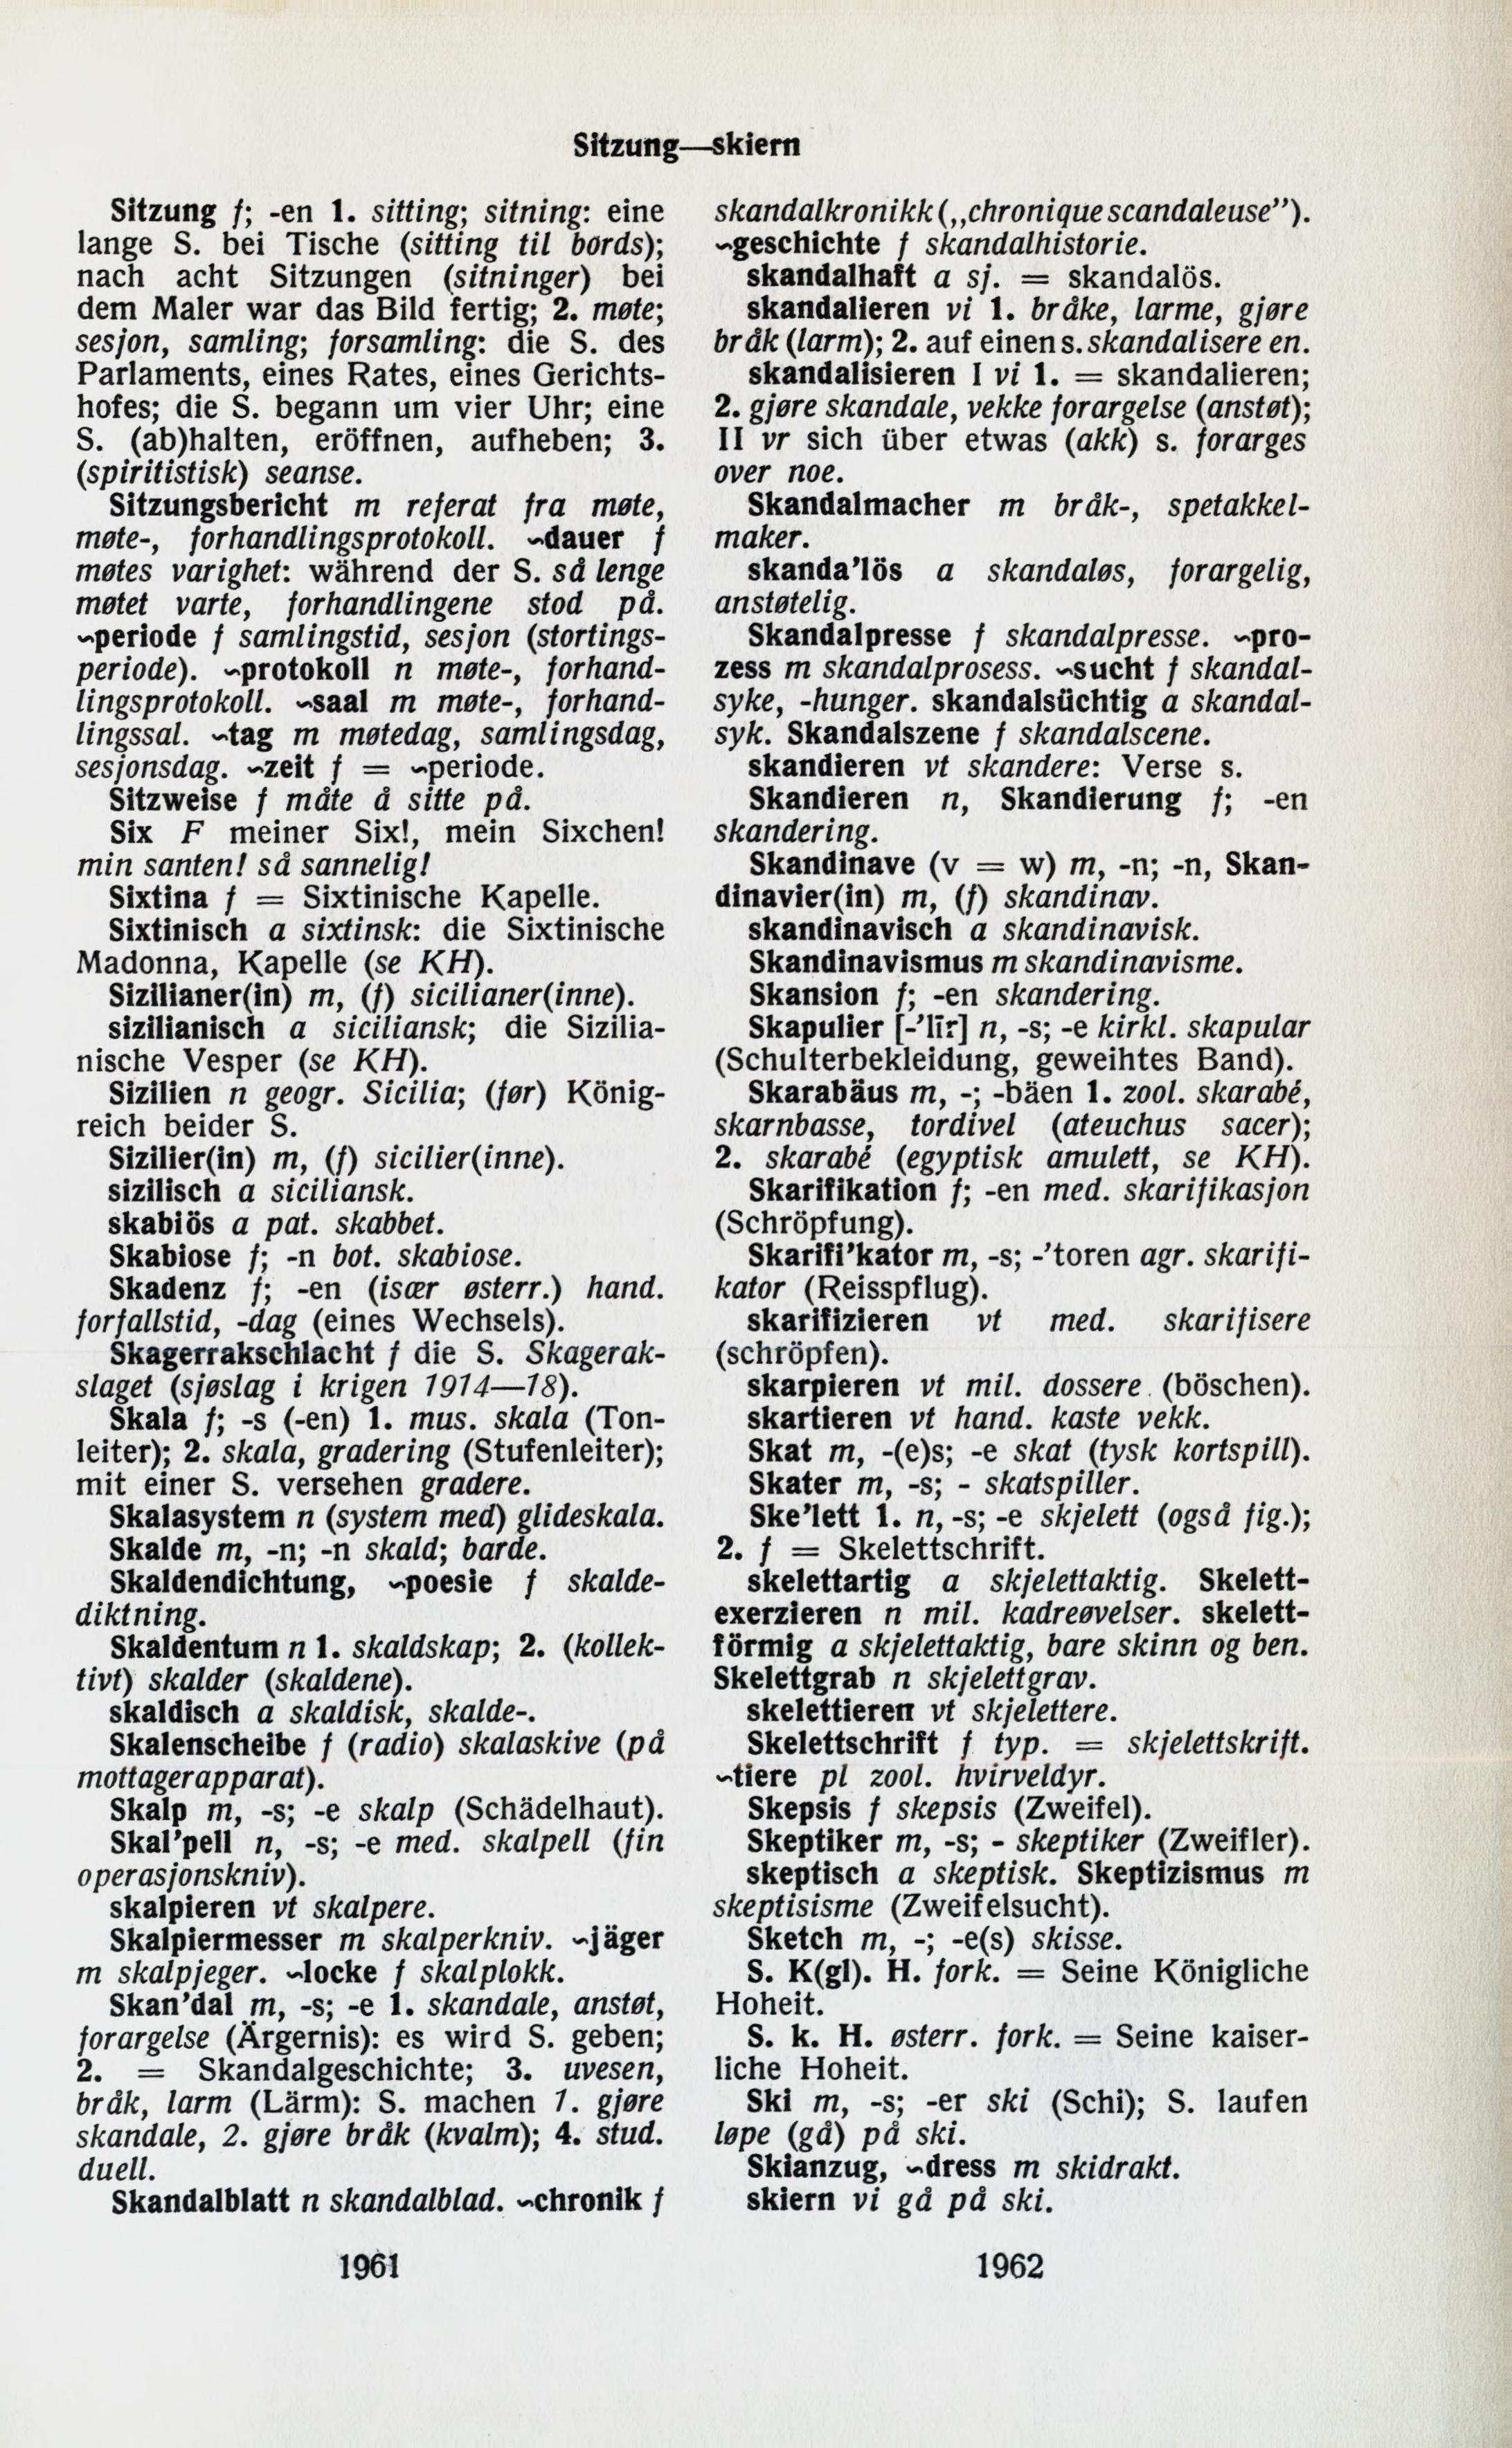 1961-1962 (Tysk-norsk ordbok)